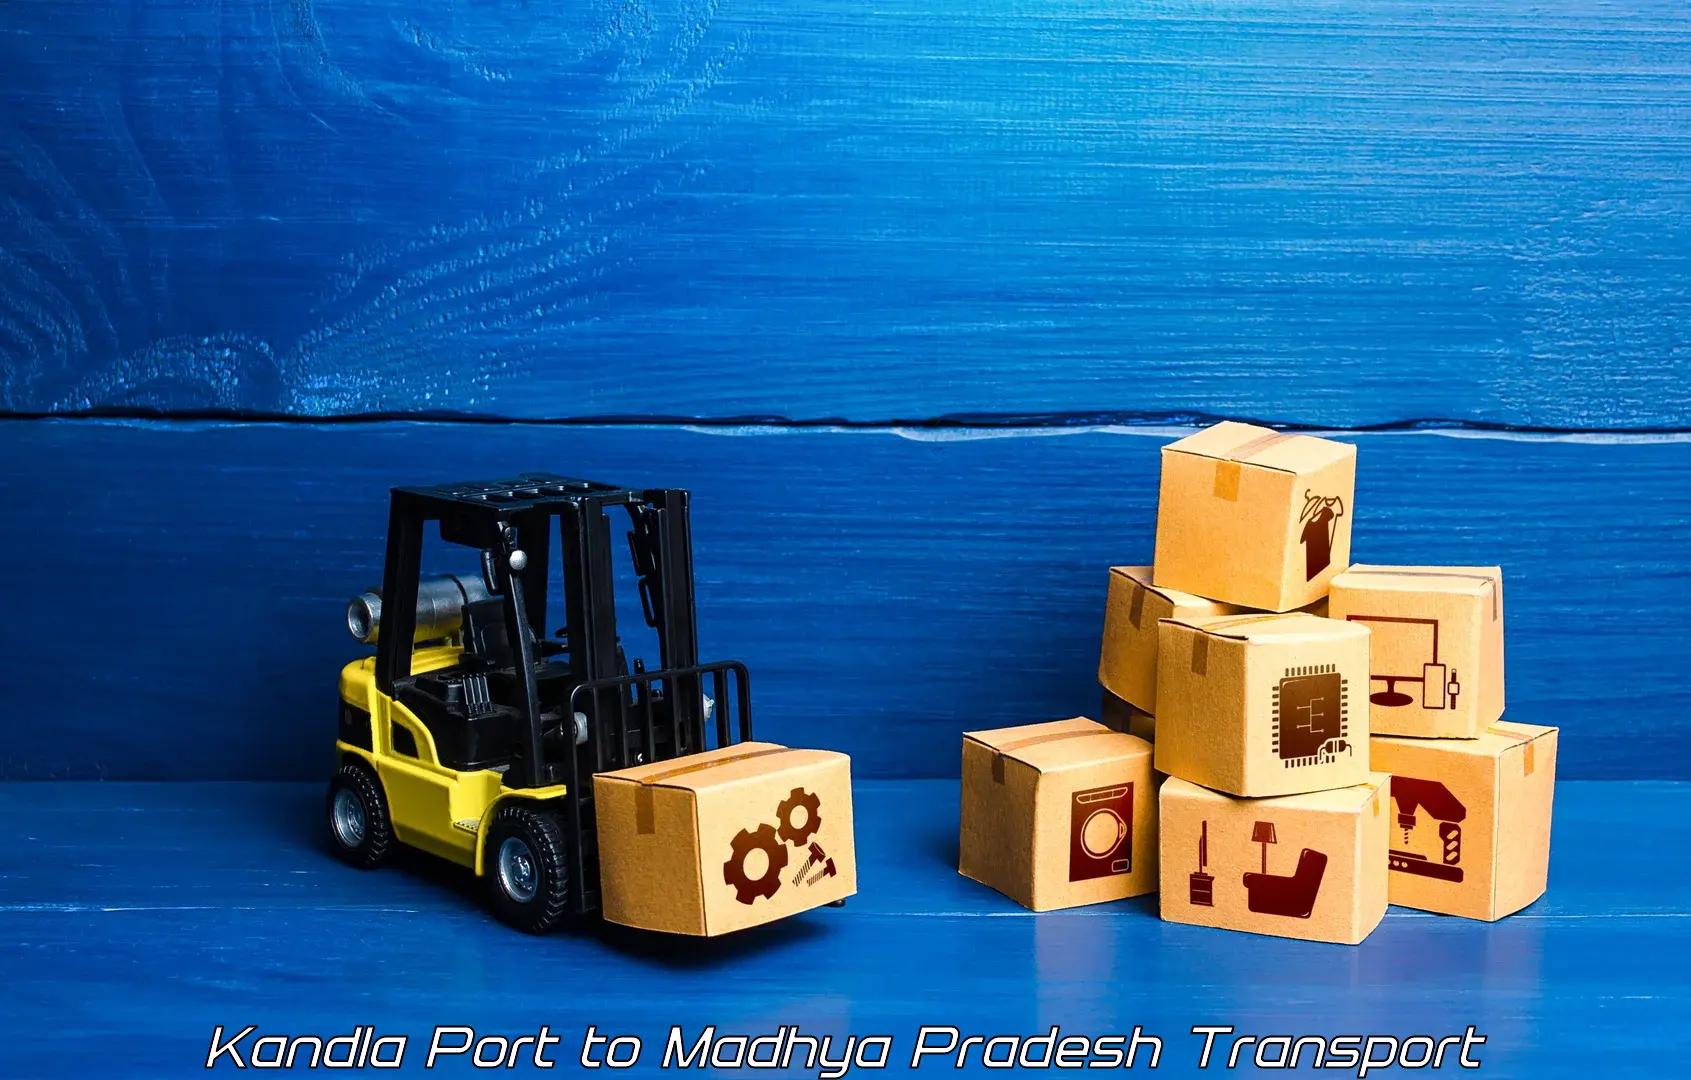 Transport in sharing in Kandla Port to Shajapur